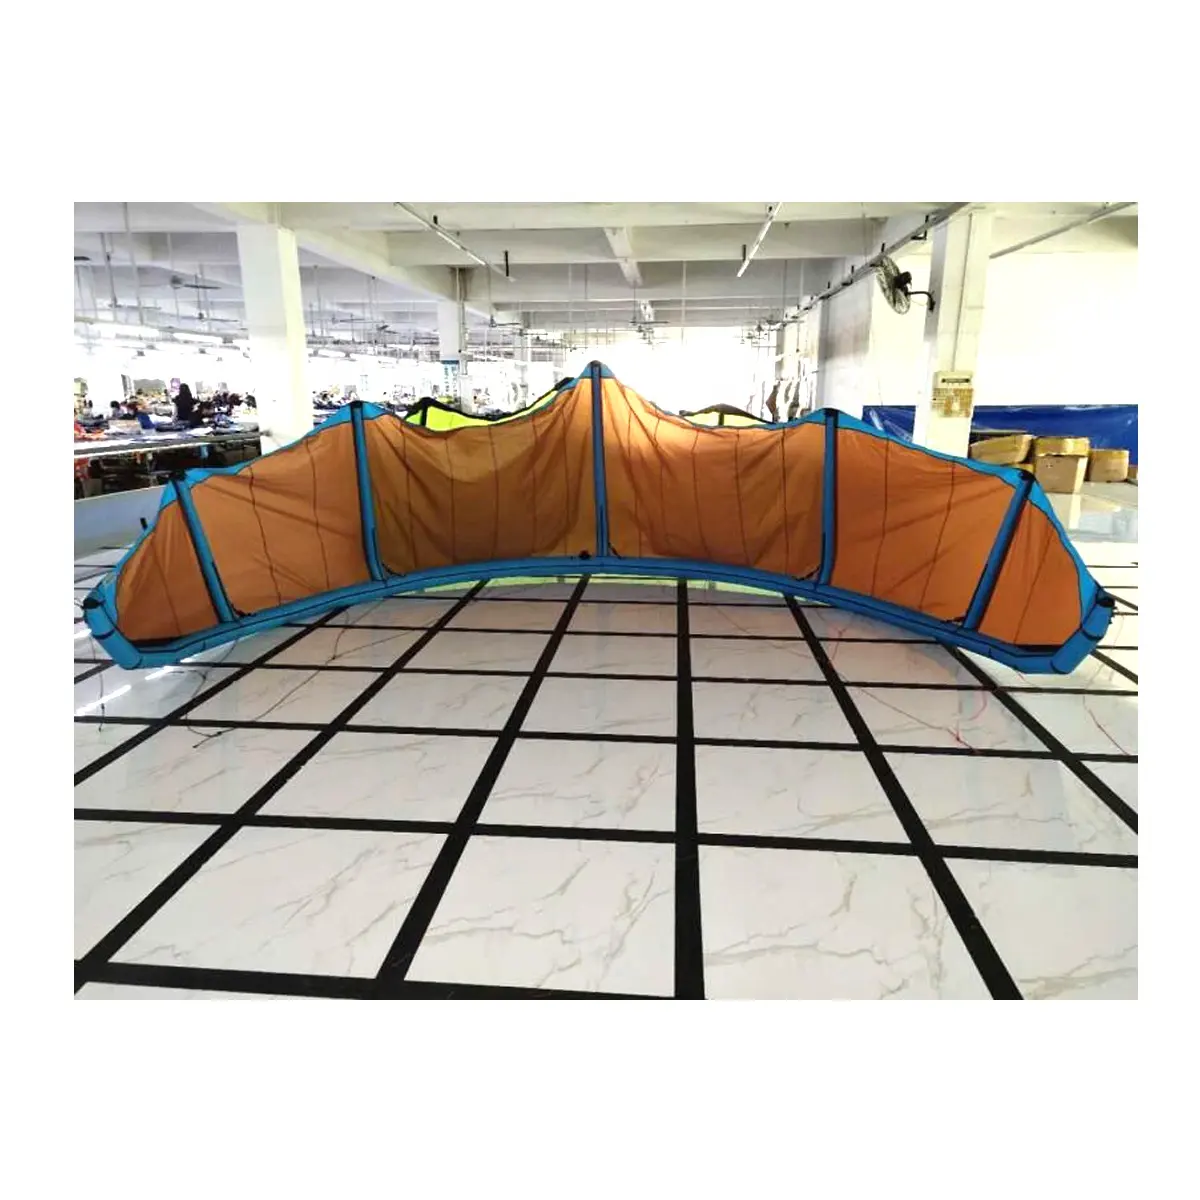 Placa de kite de tecido de nylon com 6m, kitesurfing